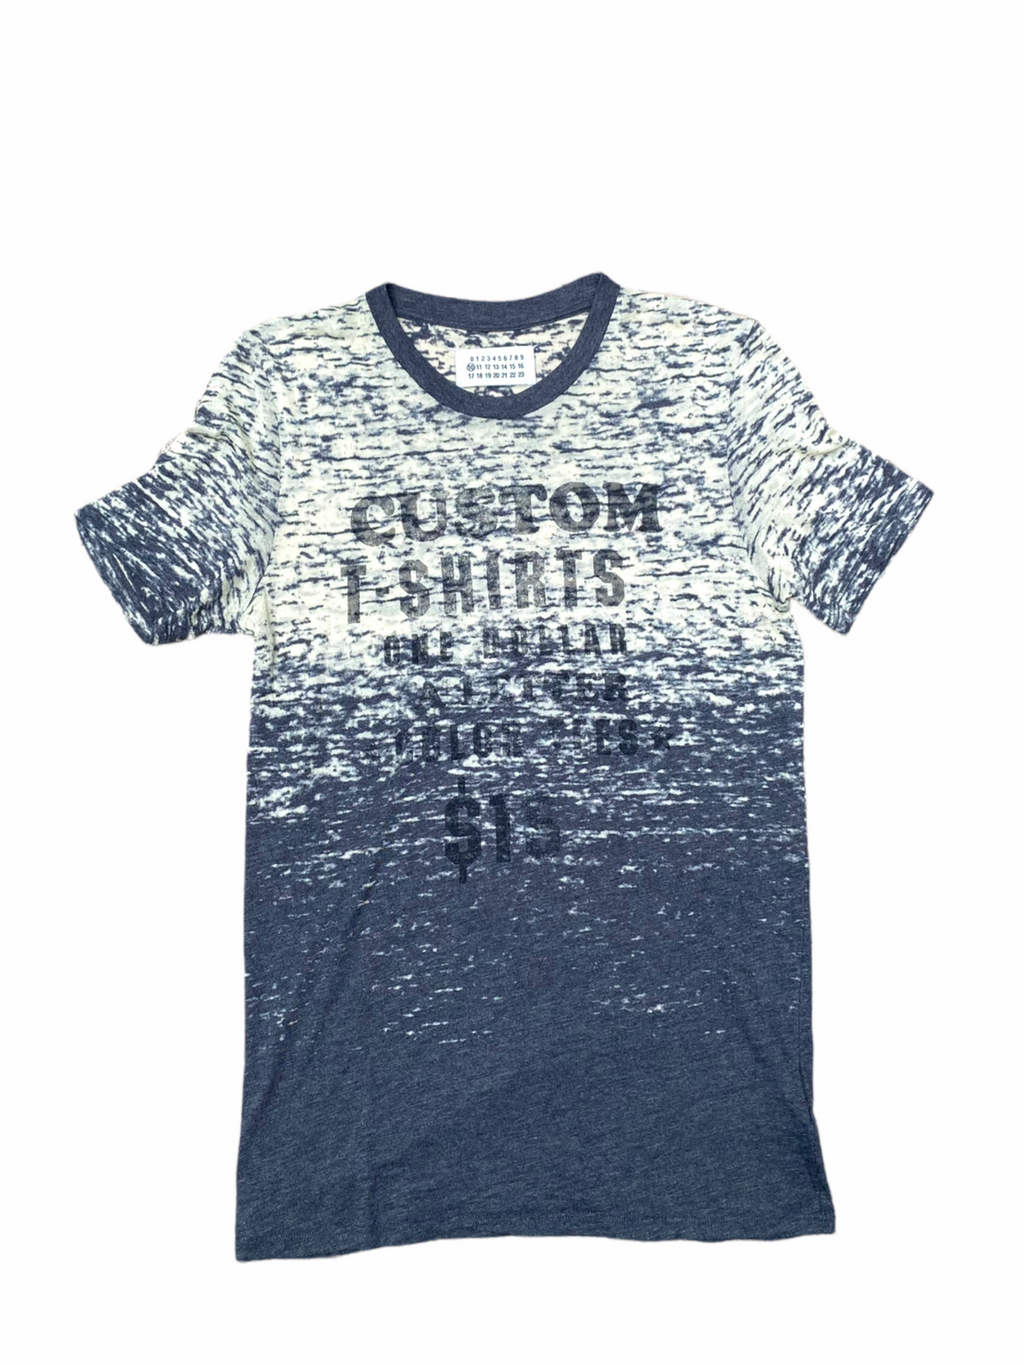 SS 2009 Custom T-shirt Size 48